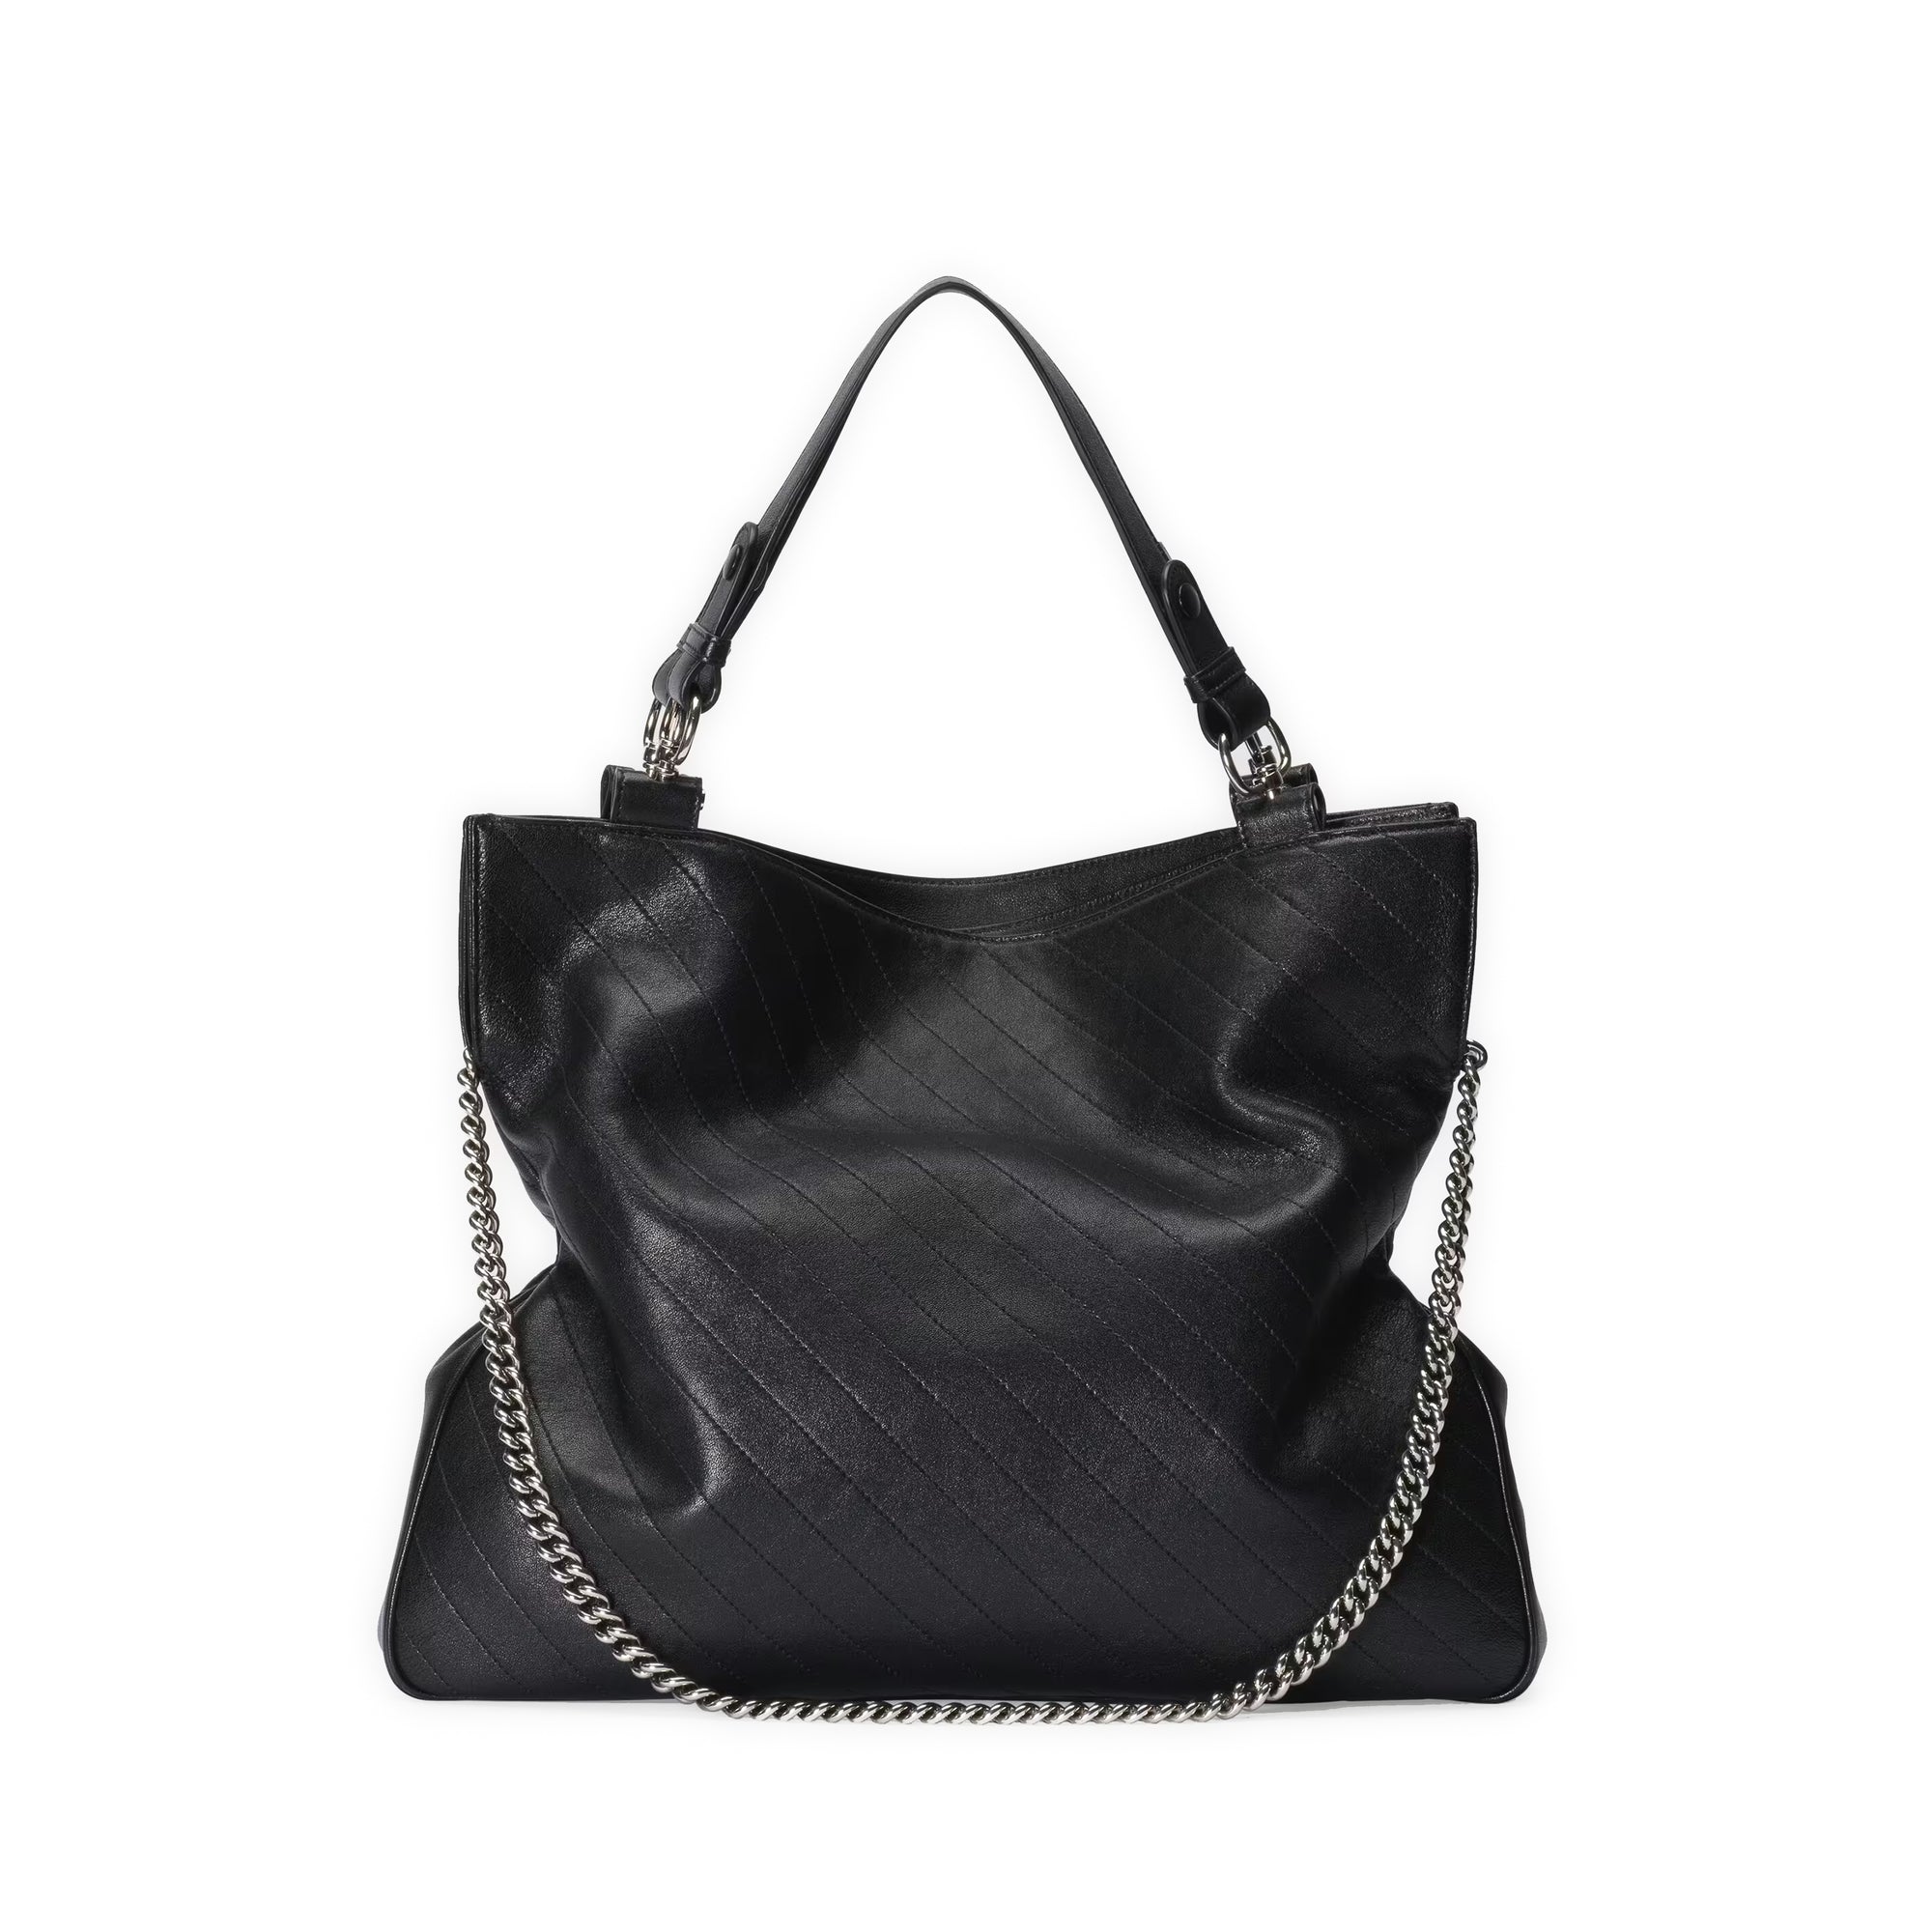 Gucci - Women’s Blondie Medium Tote Bag - (Black) view 5